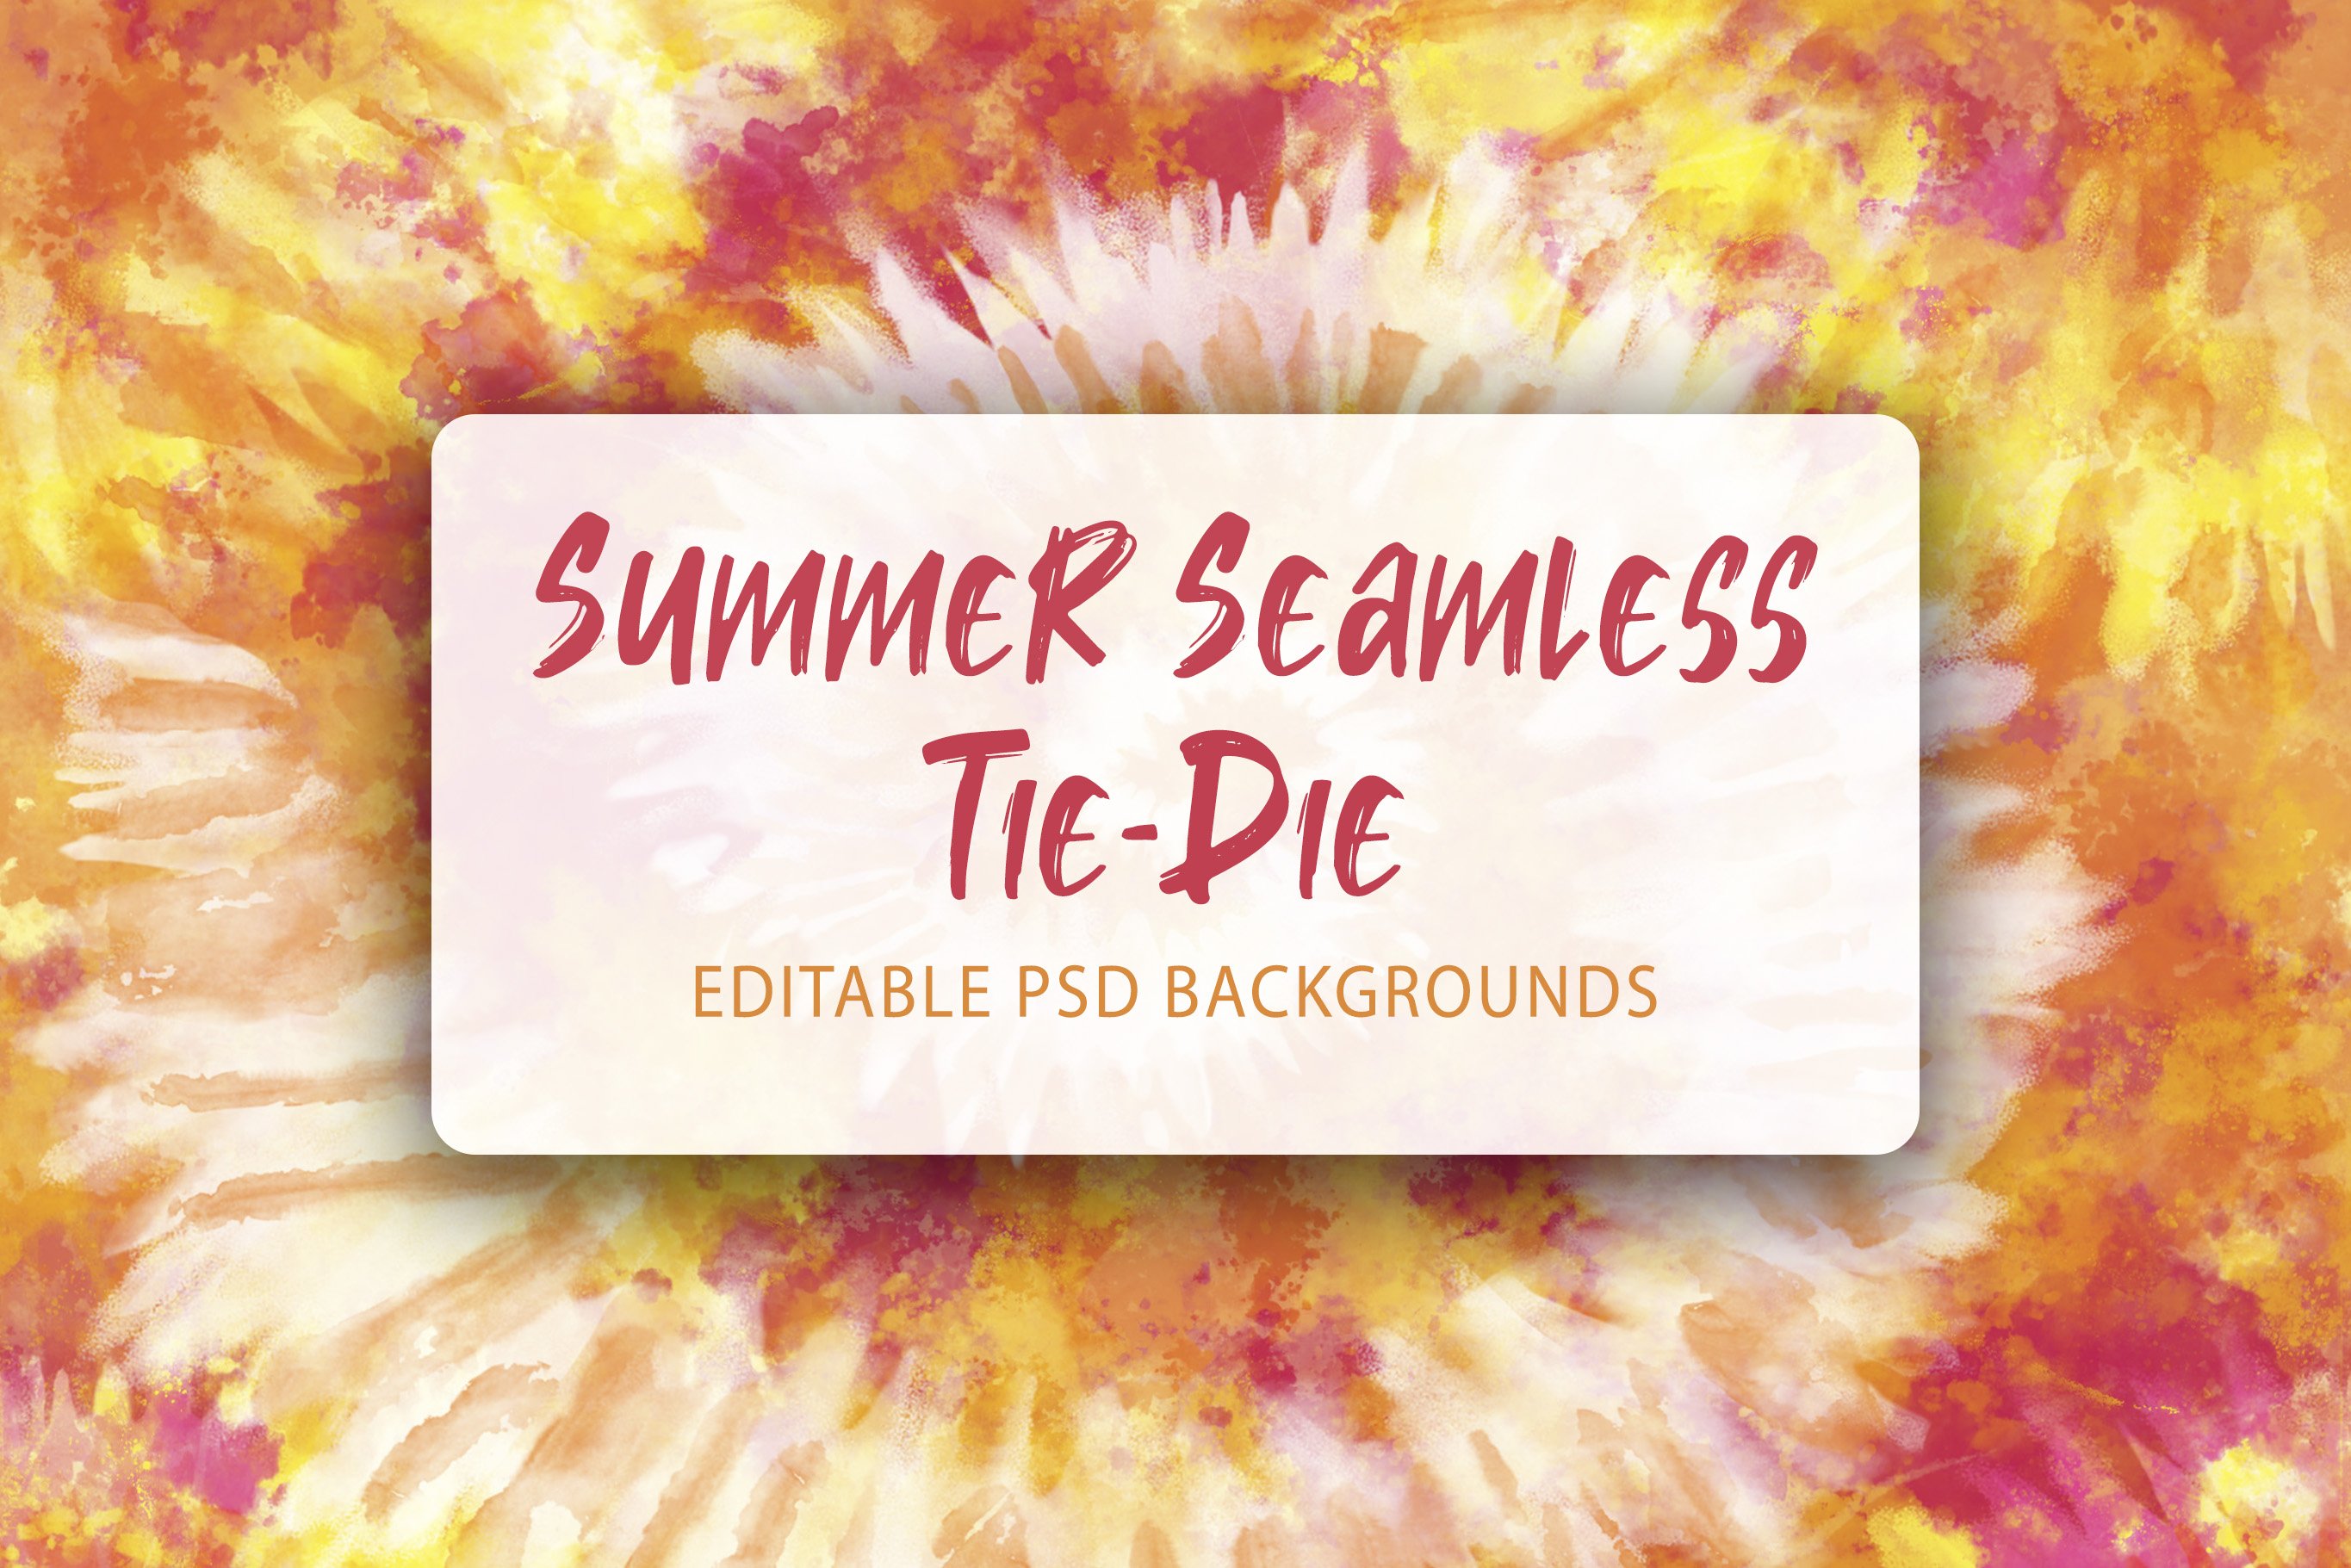 Summer Seamless Digital Tie-Dye cover image.